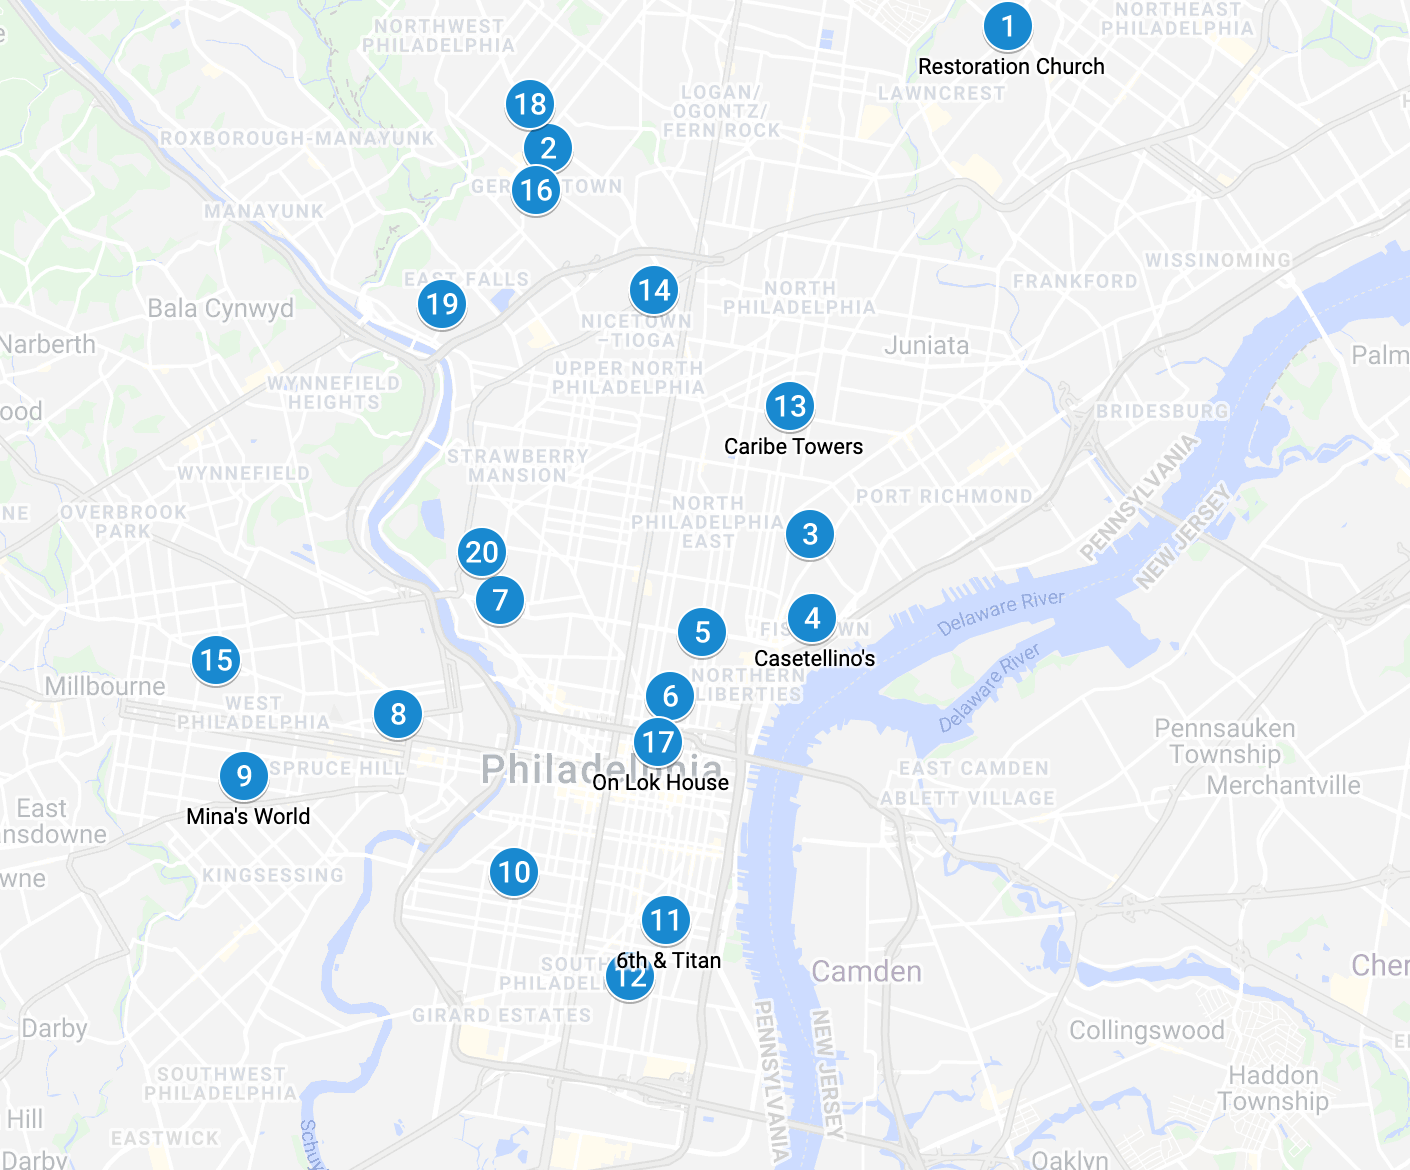 Google maps displays 20 locations of the community fridges in Philadelphia.